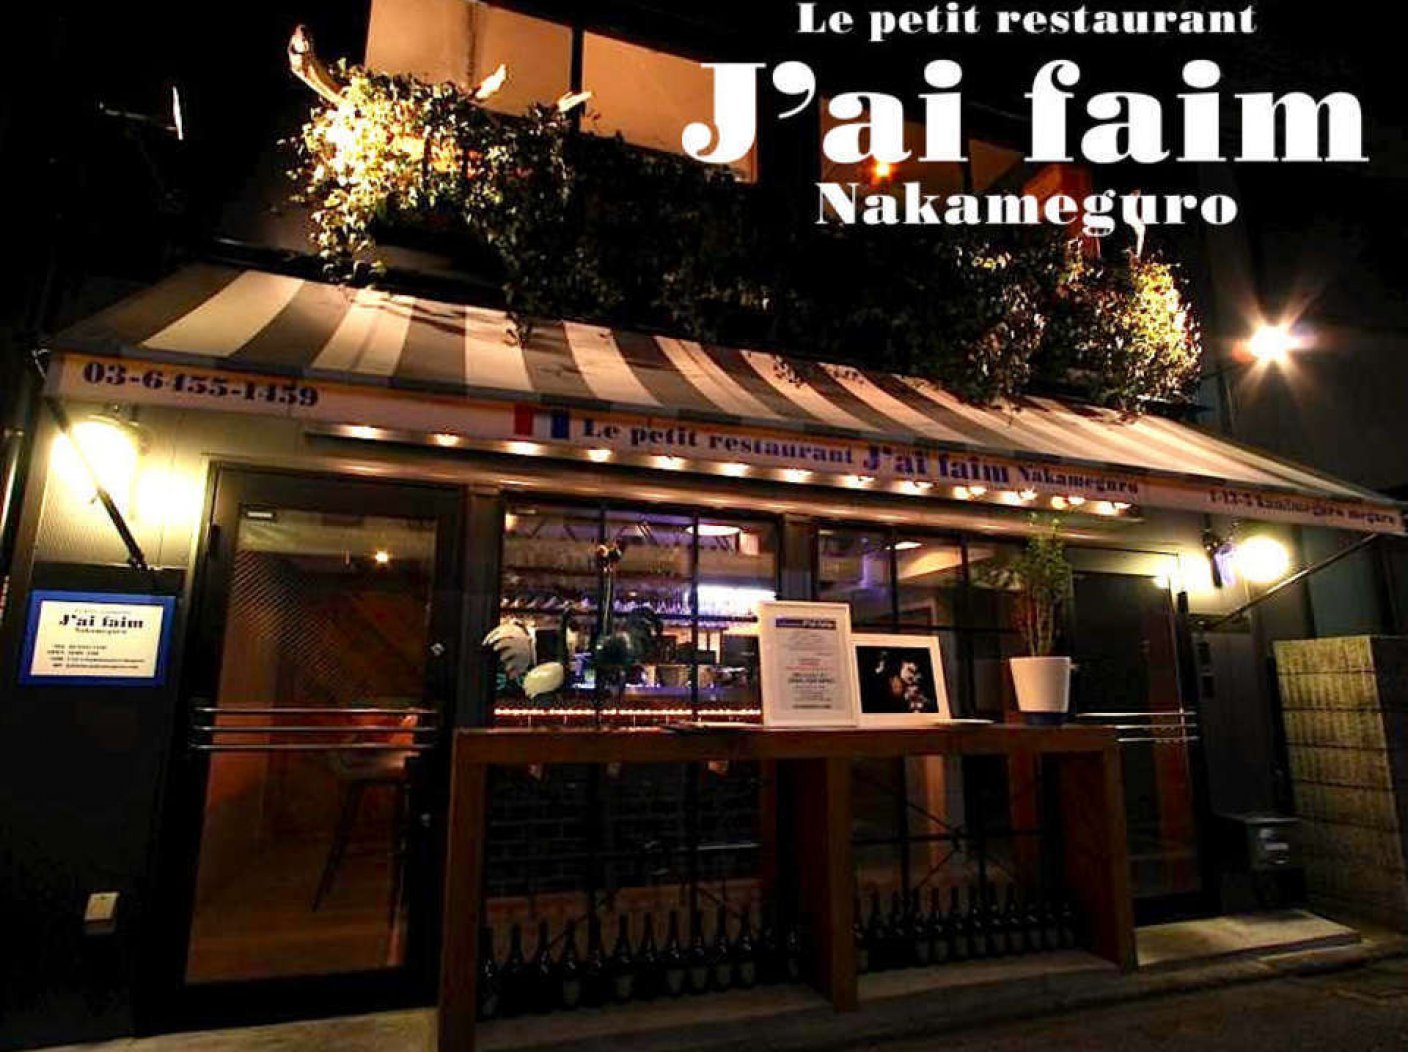 Le Petit Restaurant J'ai faim Nakameguroの写真 1